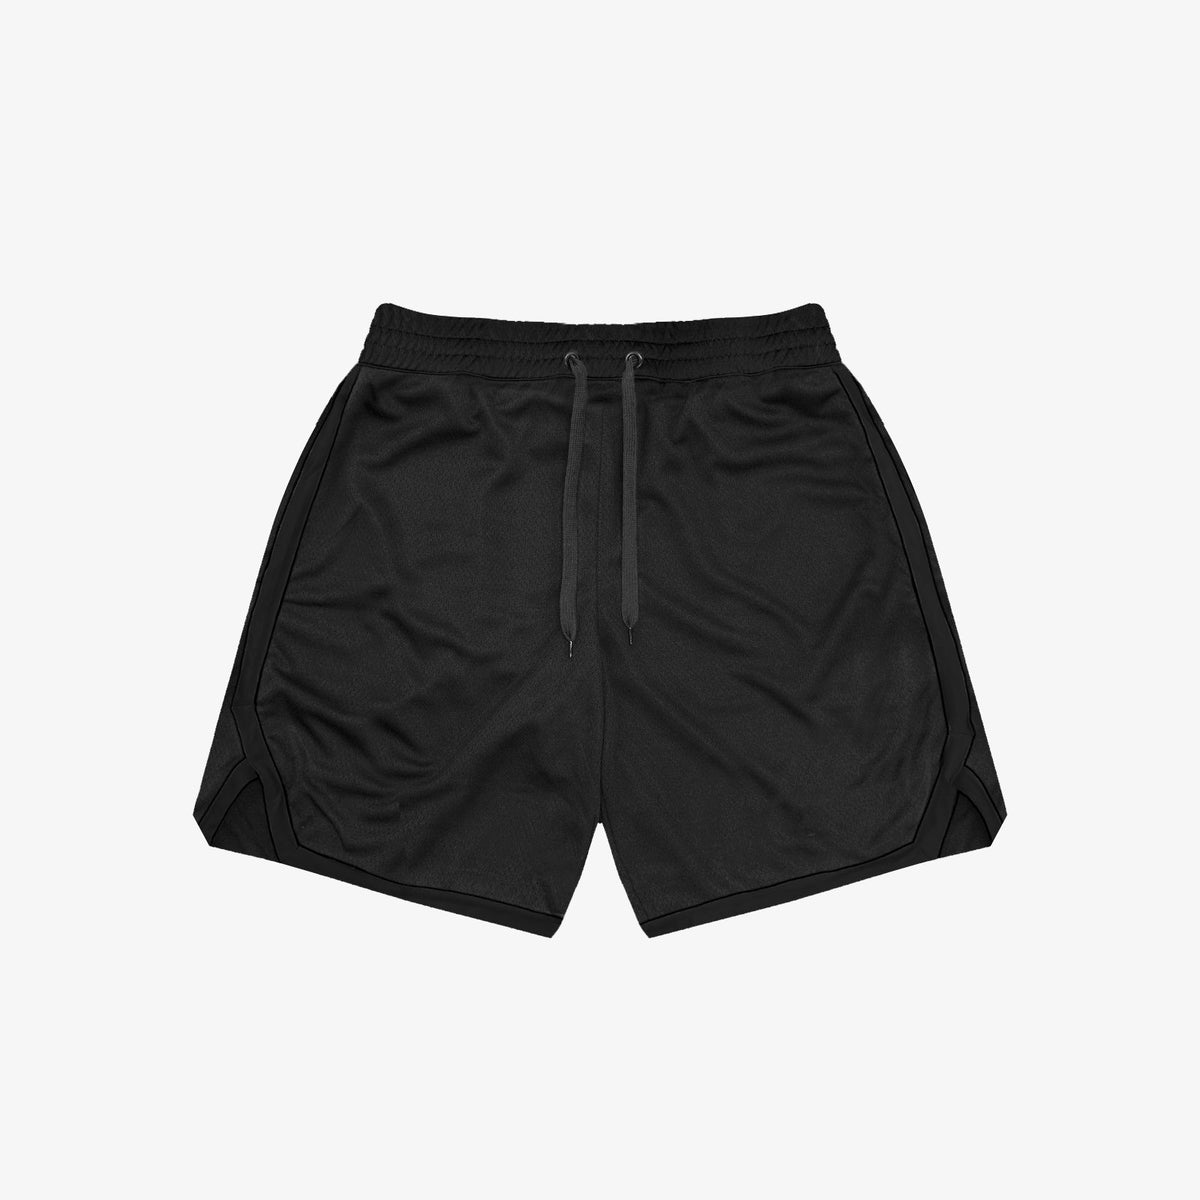 Basketball Pocket Shorts - Black/Black